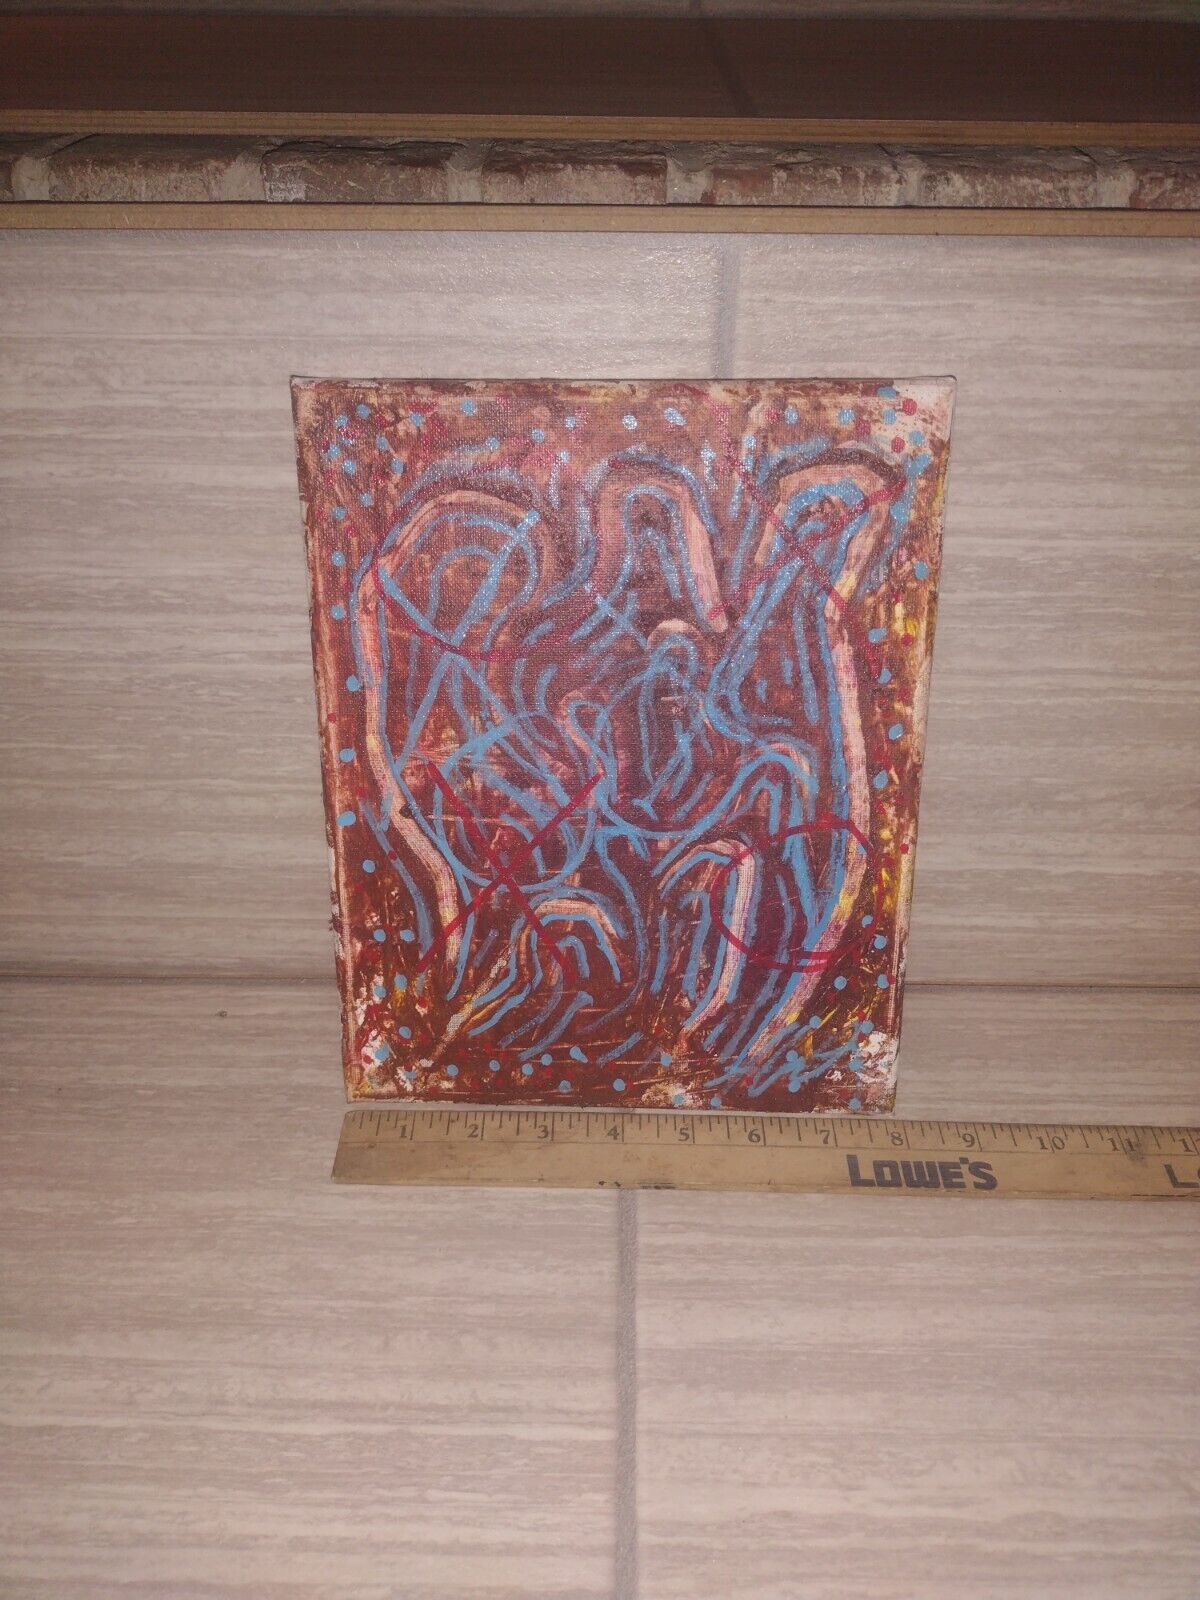 SXOGOD Original 1/1 OFAK Signed Transcendial Painting *Rare* Art Collector Dream